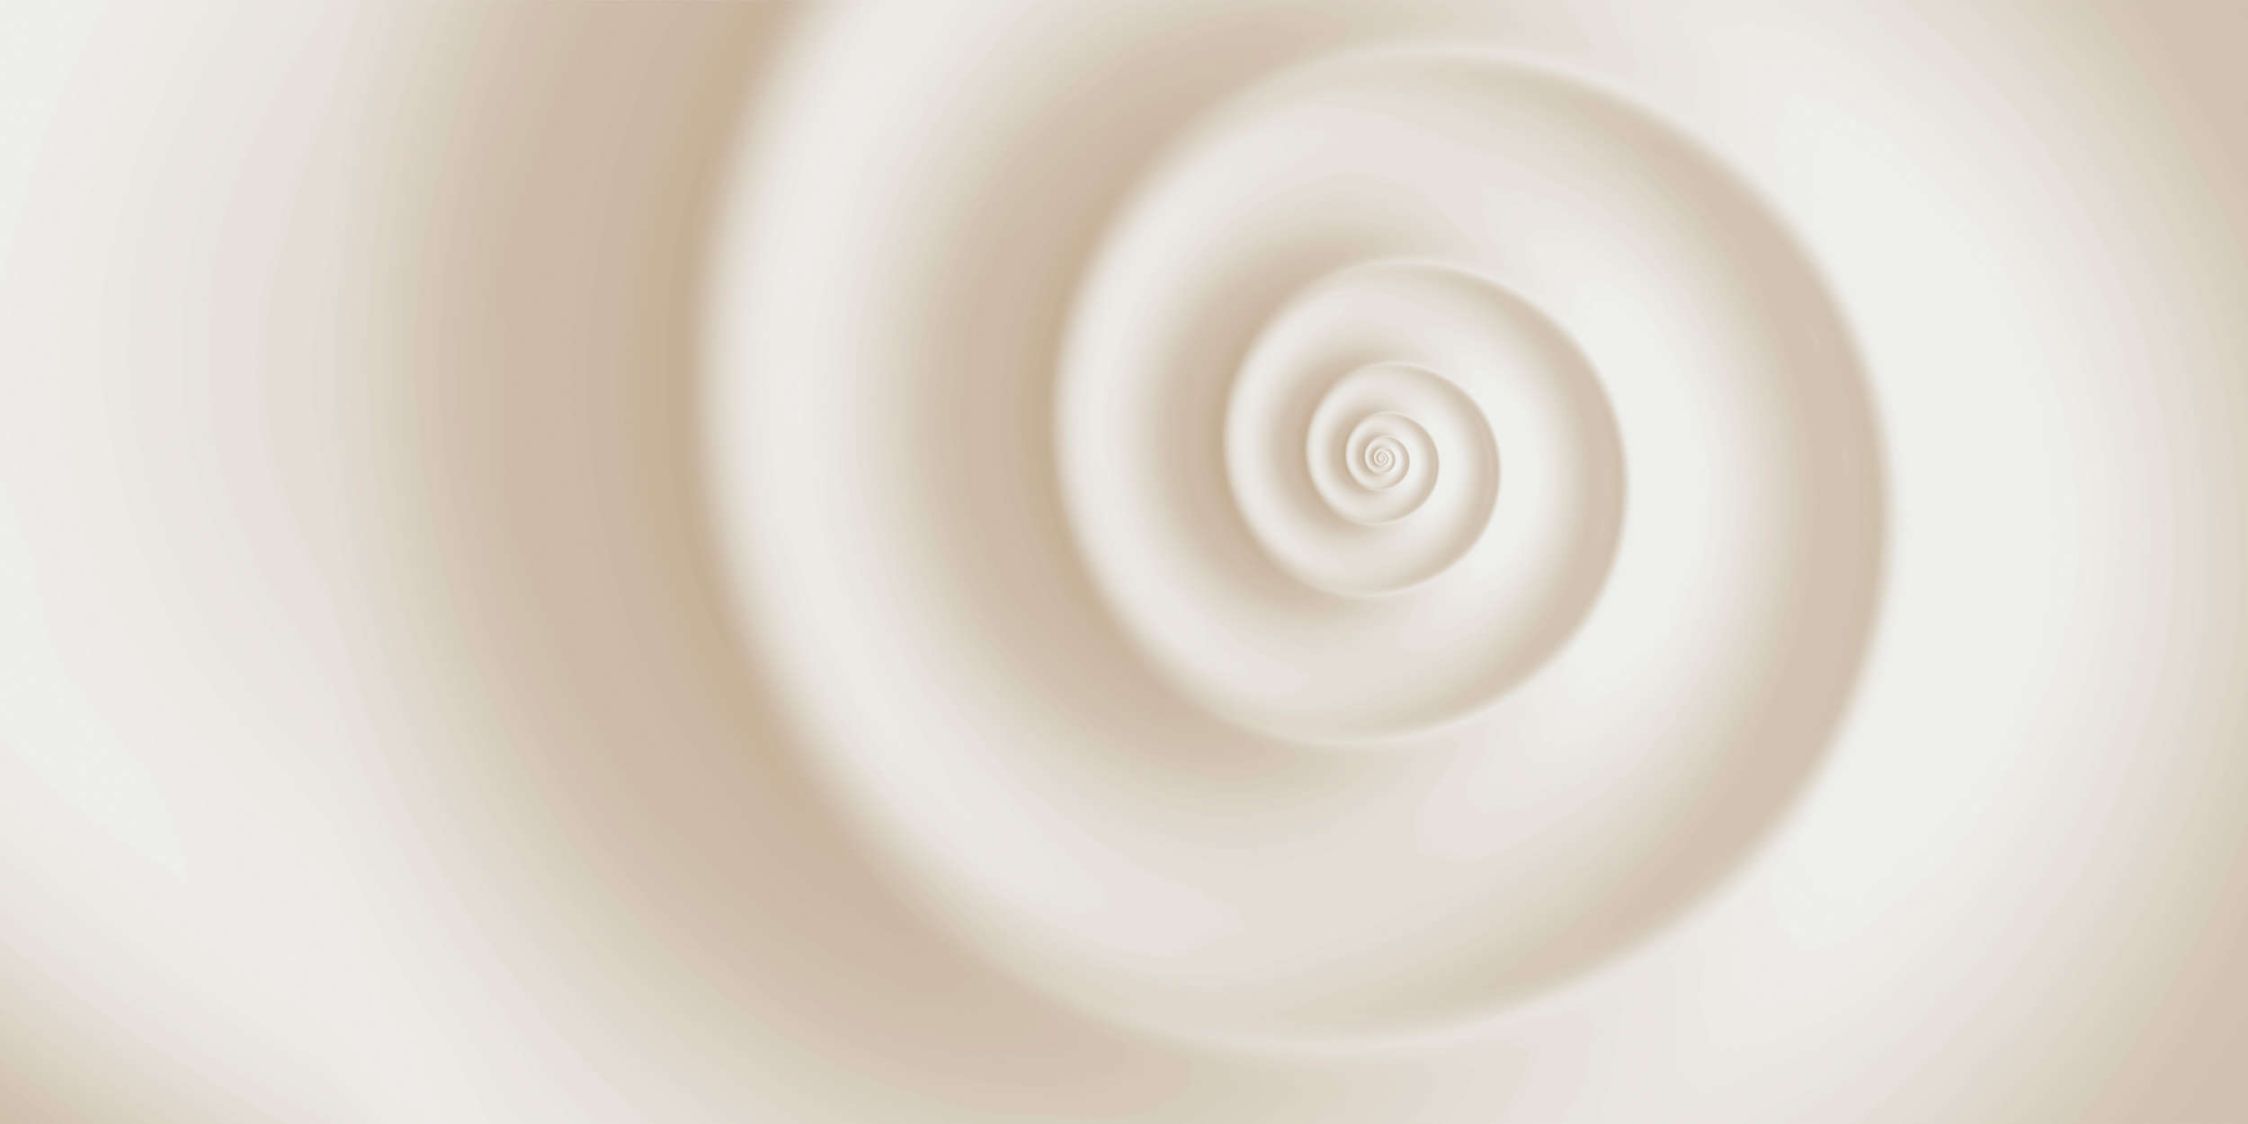             Fotomural »remolino« - Ligero dibujo en espiral - Tela no tejida lisa, ligeramente nacarada
        